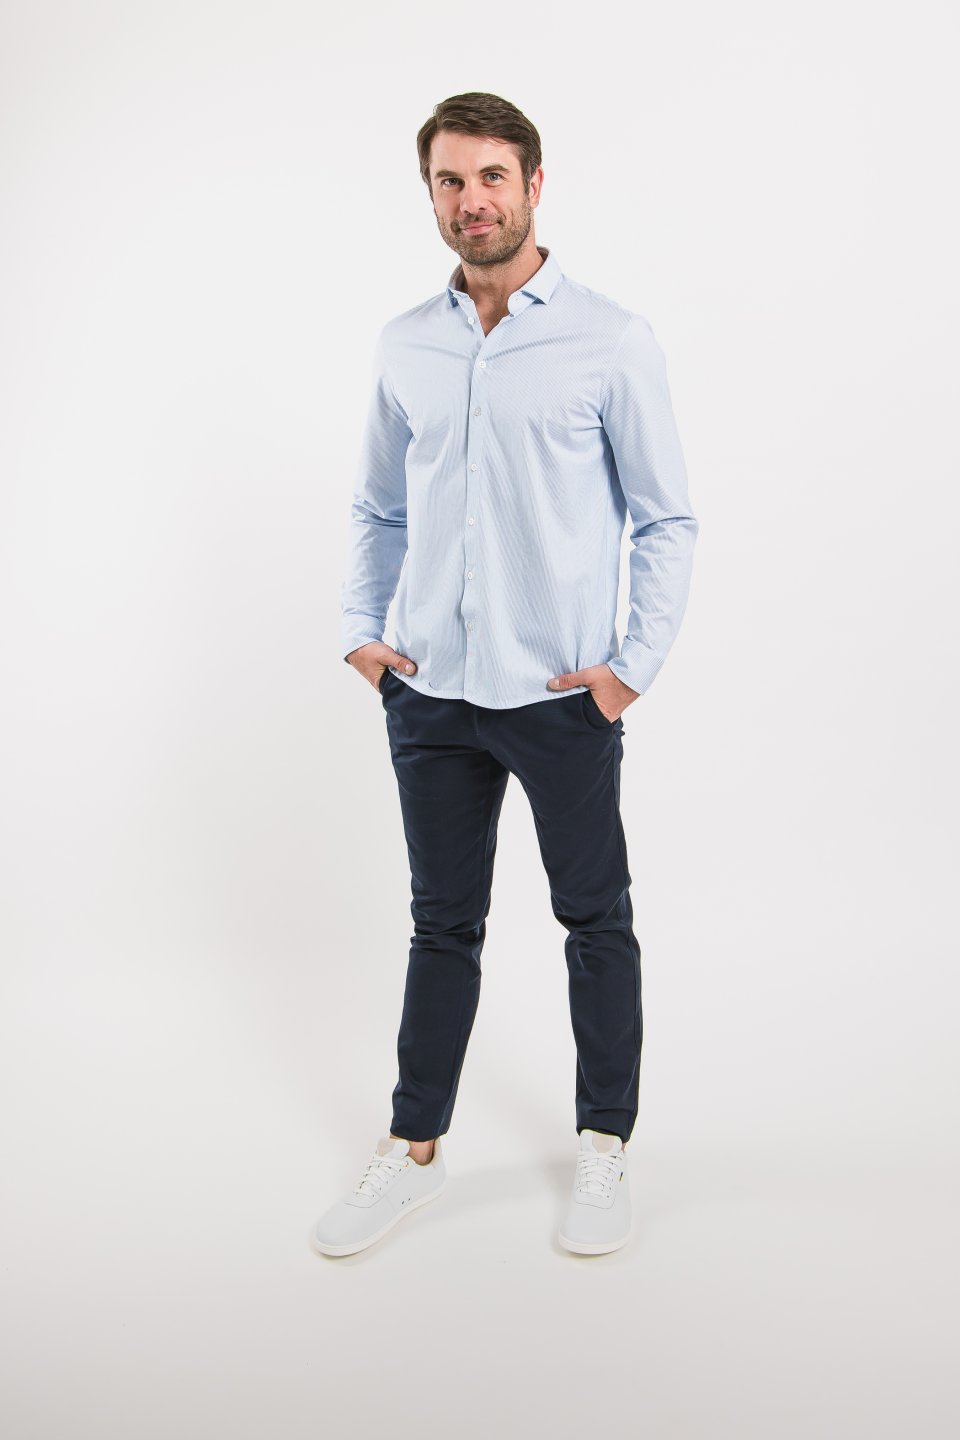 Men’s Shirt Regular Be Lenka Essentials - Blue and White